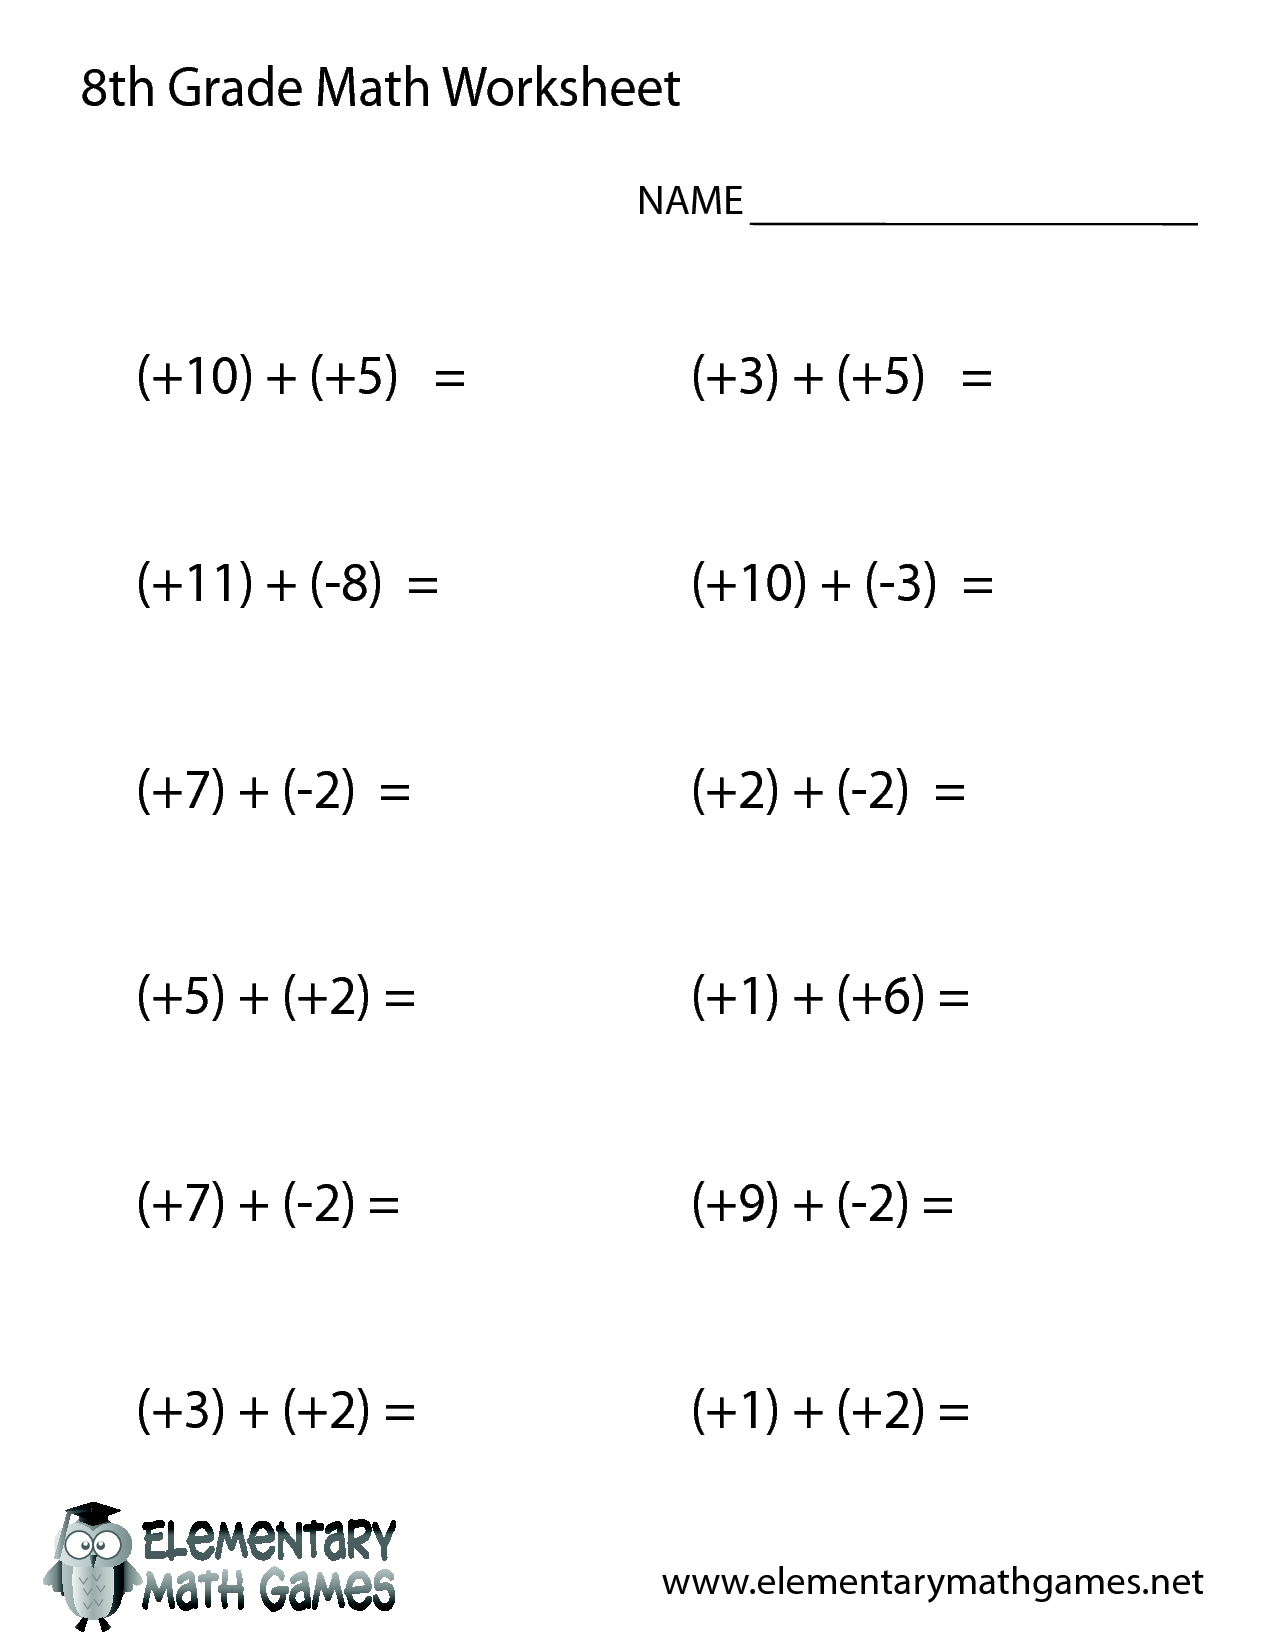 8th Grade Math Worksheets Printable Free